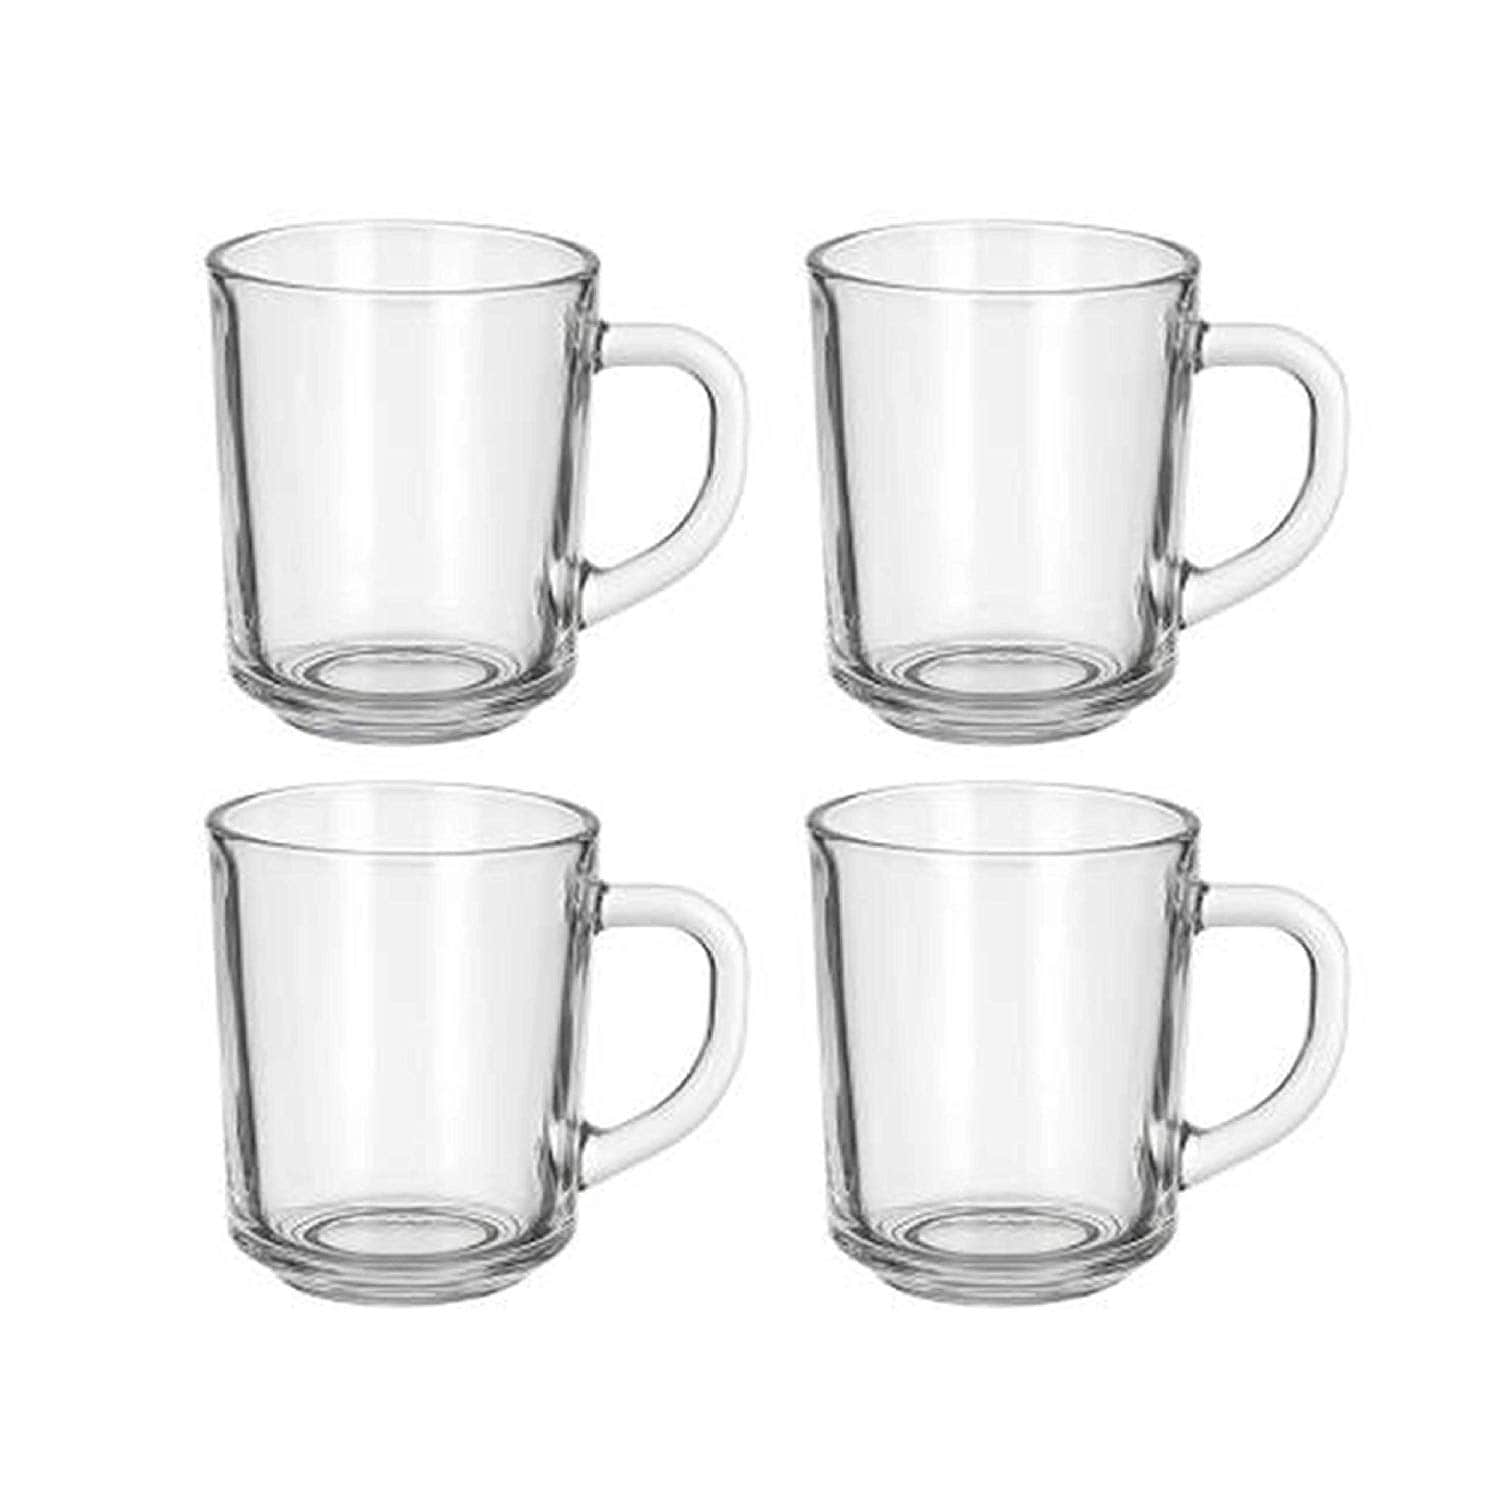 8 oz clear glass coffee mugs